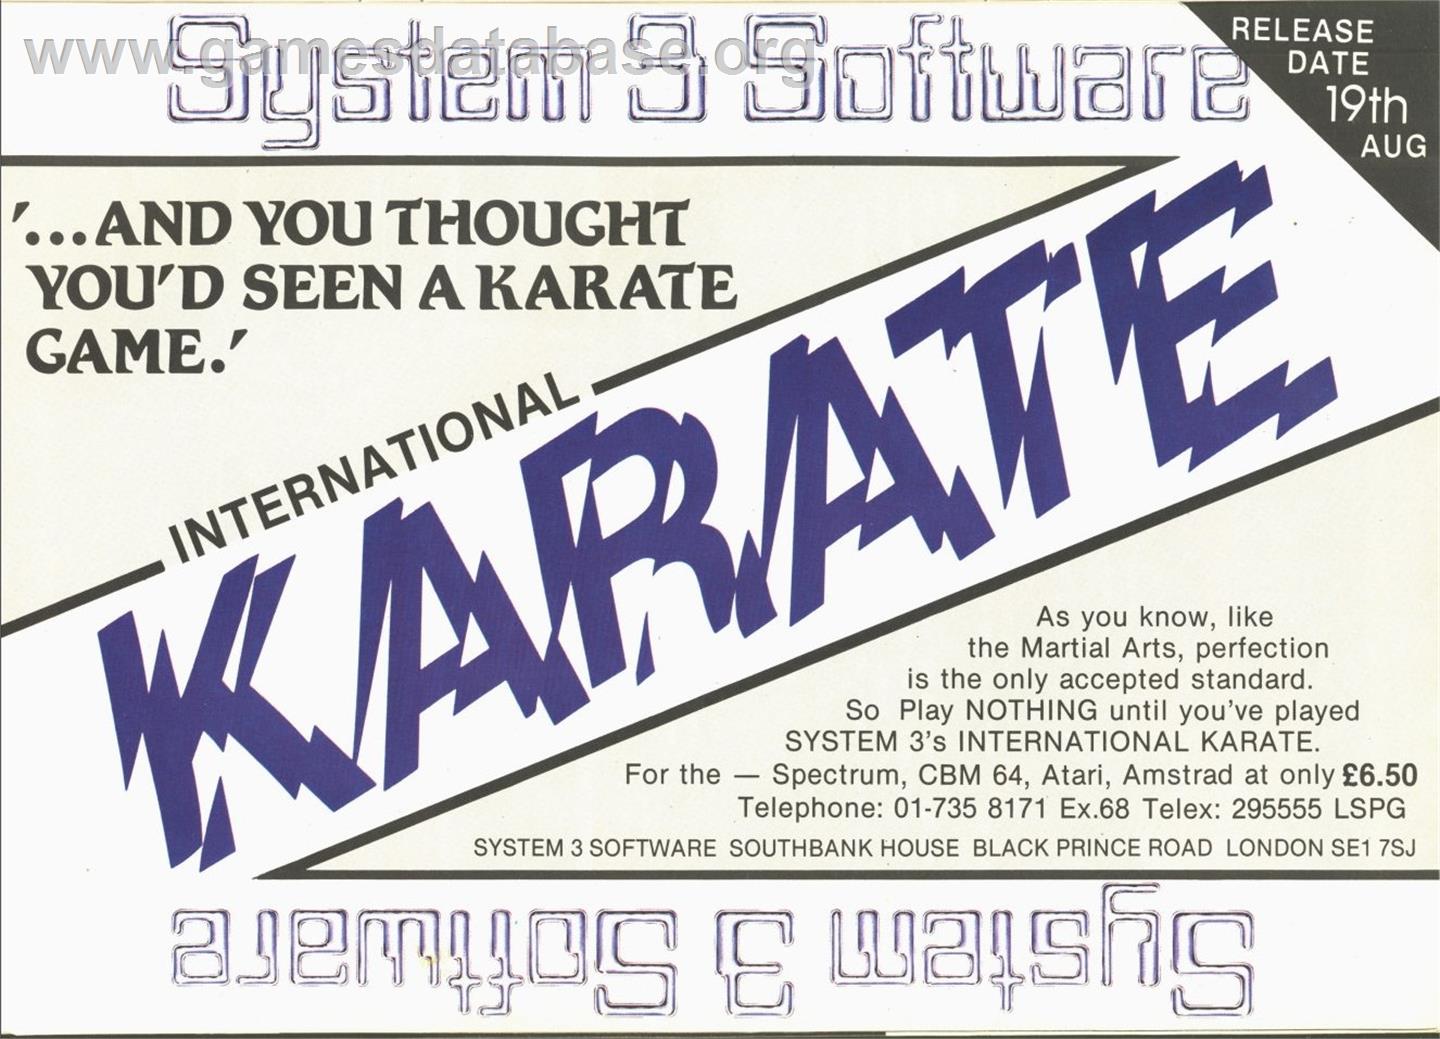 International Karate - MSX - Artwork - Advert